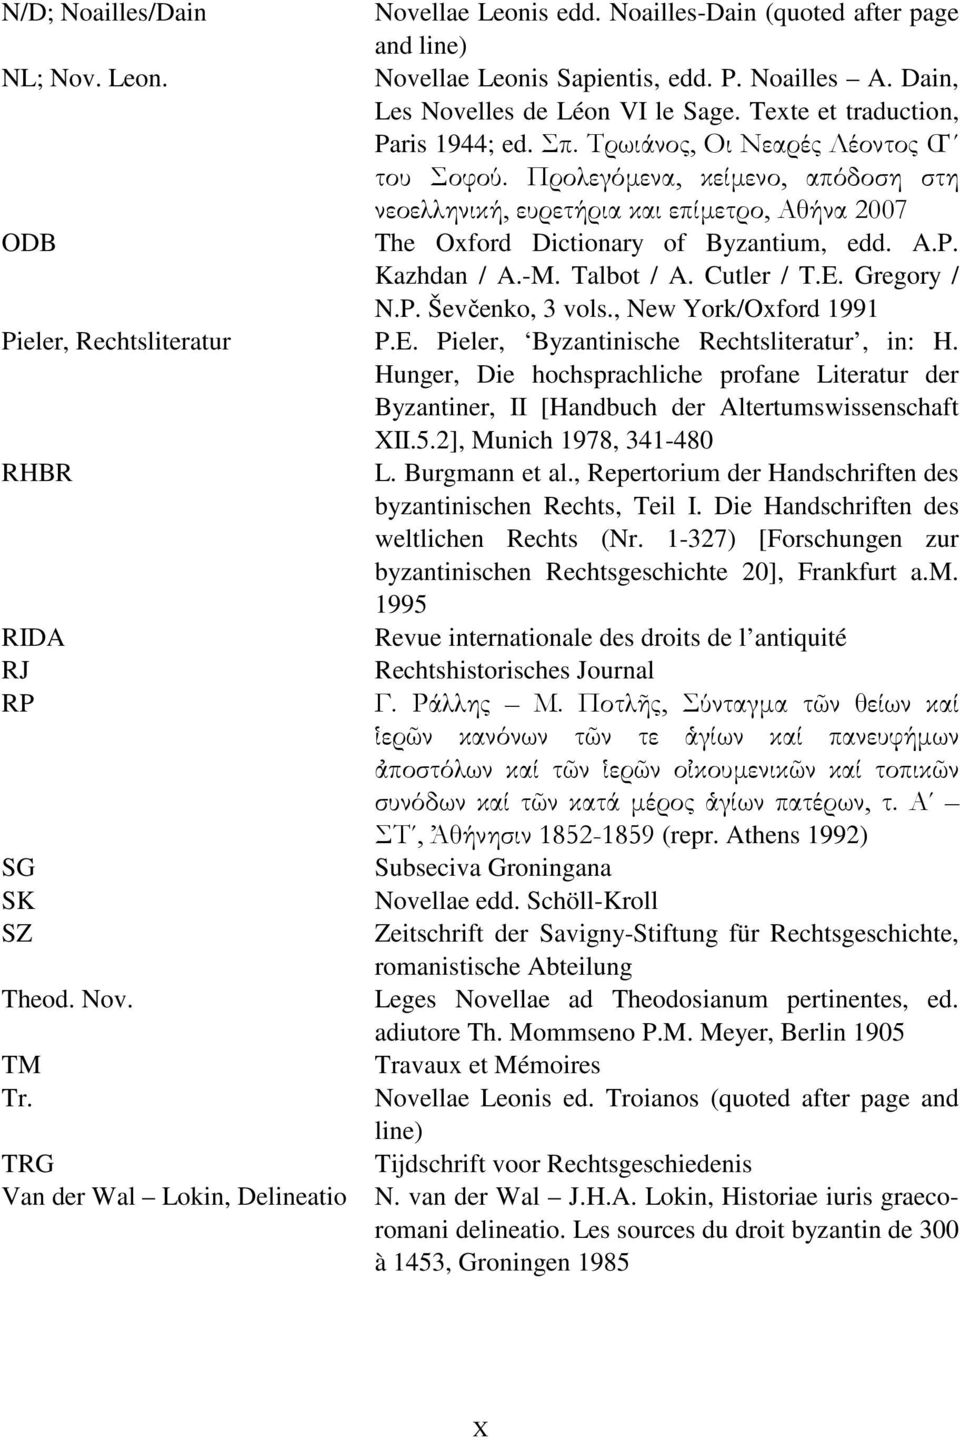 A.P. Kazhdan / A.-M. Talbot / A. Cutler / T.E. Gregory / N.P. Ševčenko, 3 vols., New York/Oxford 1991 Pieler, Rechtsliteratur P.E. Pieler, Byzantinische Rechtsliteratur, in: H.